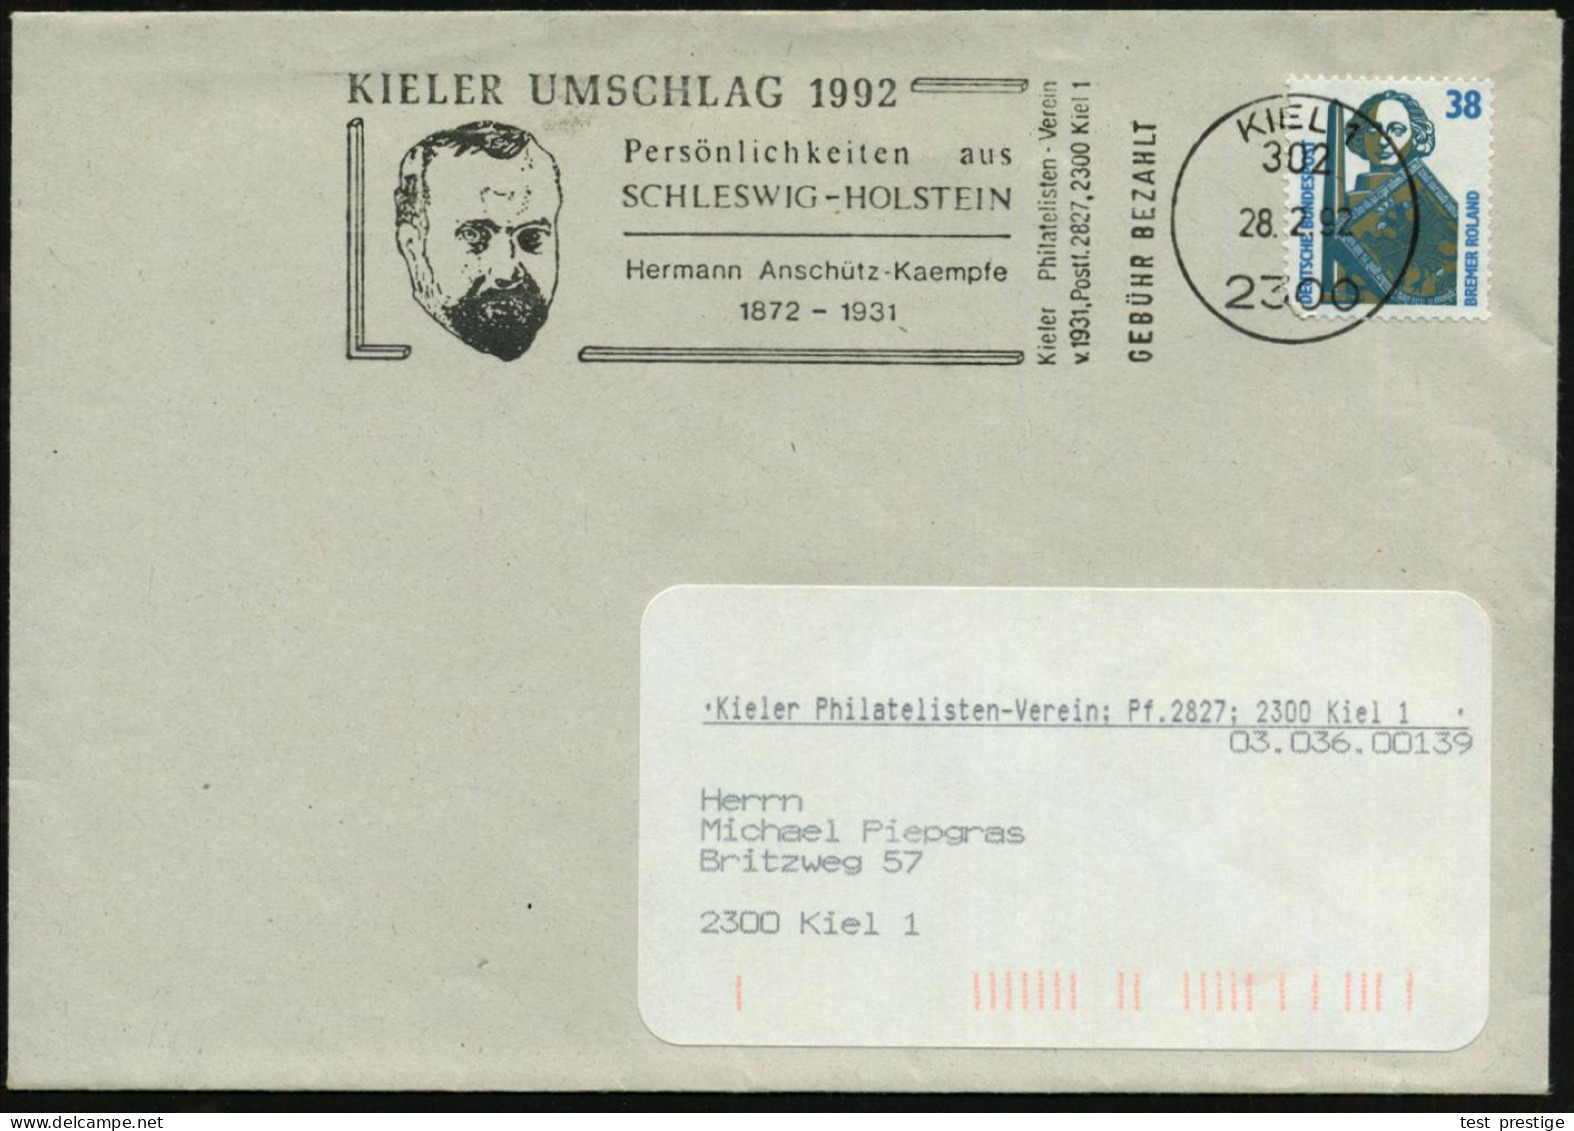 2300 KIEL 1/ 302/ GEBÜHR BEZAHLT/ ..Hermann Anschütz-Kaempfe/ 1872-1931.. 1992 (28.2.) Absenderstempel (VE) = Kopfbild D - Geography